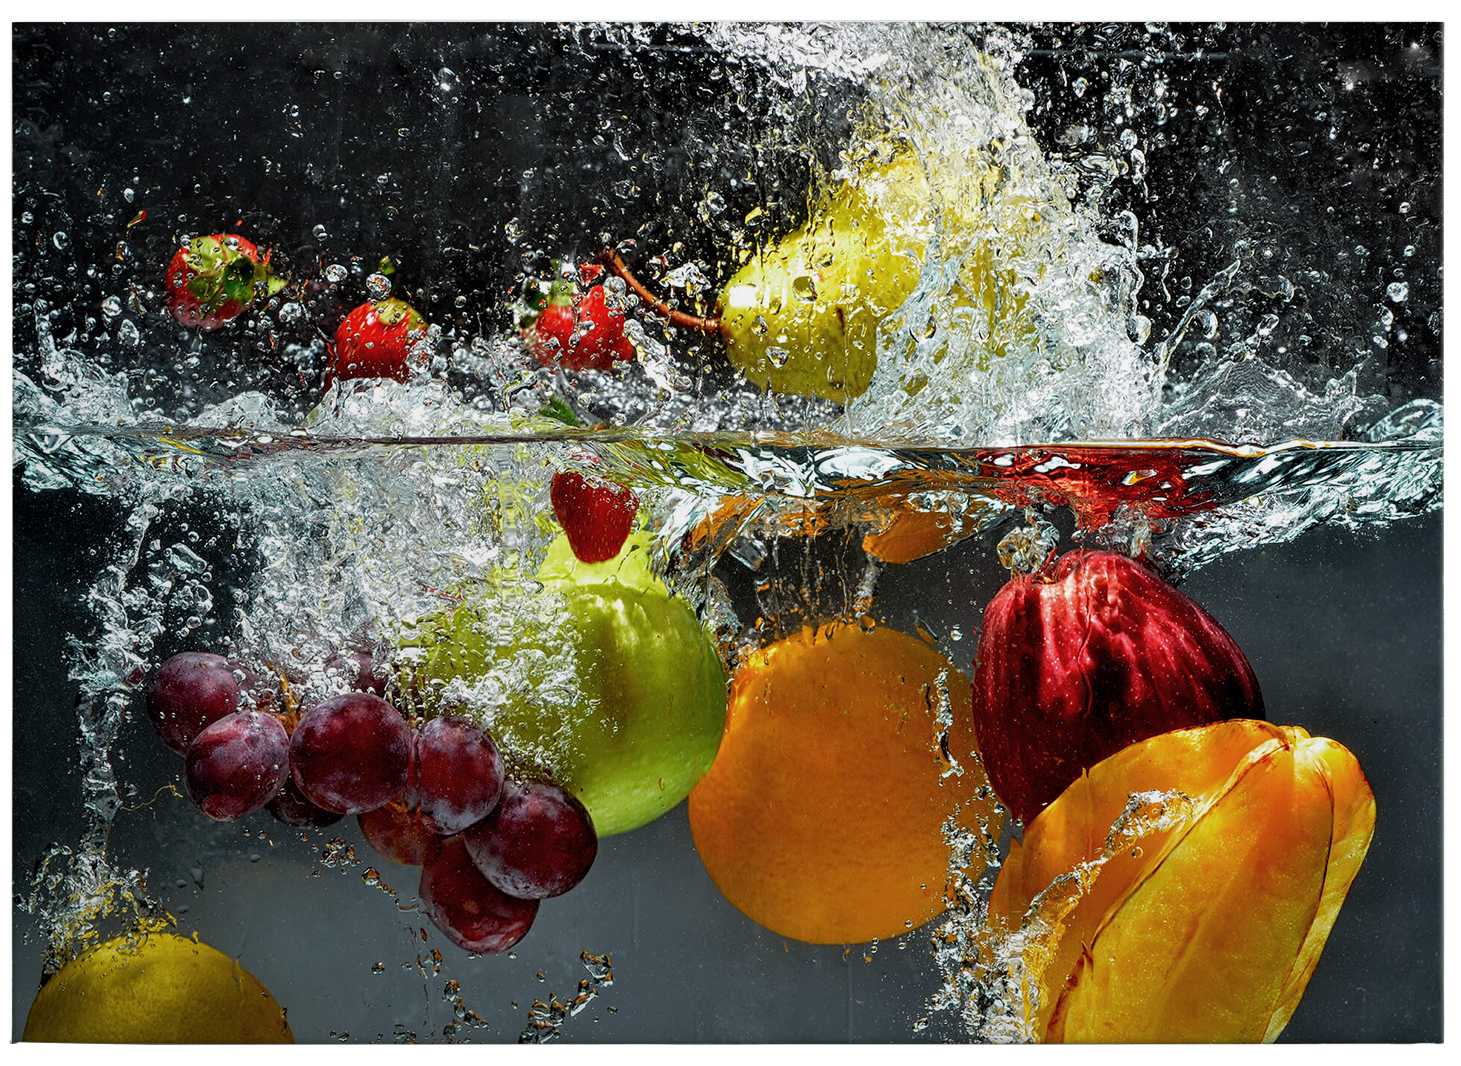             Canvas print fresh fruit in a water bath, colourful
        